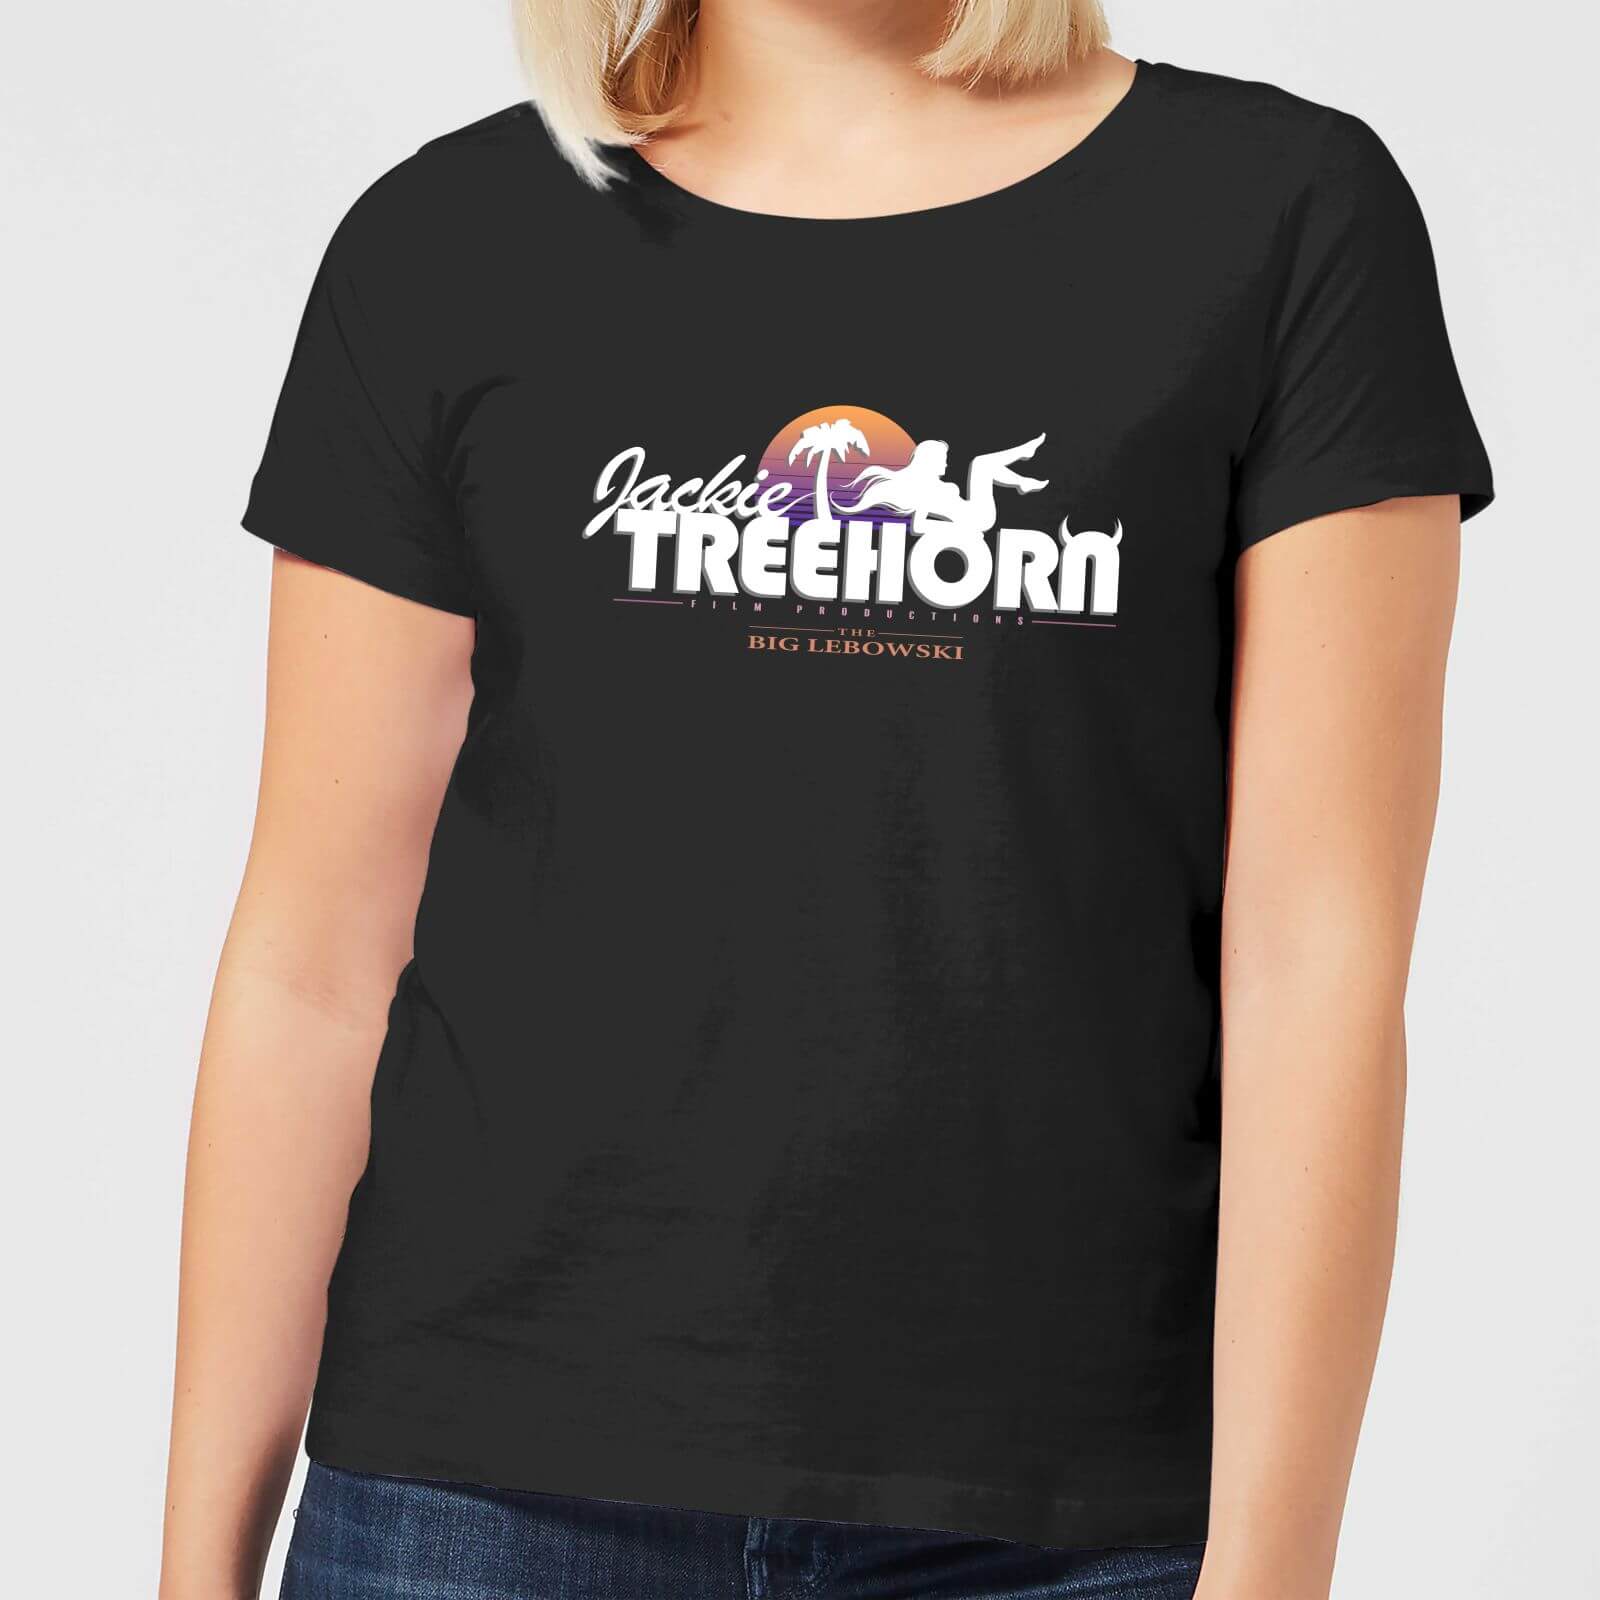 The Big Lebowski Treehorn Logo Women's T-Shirt - Black - 4XL - Black